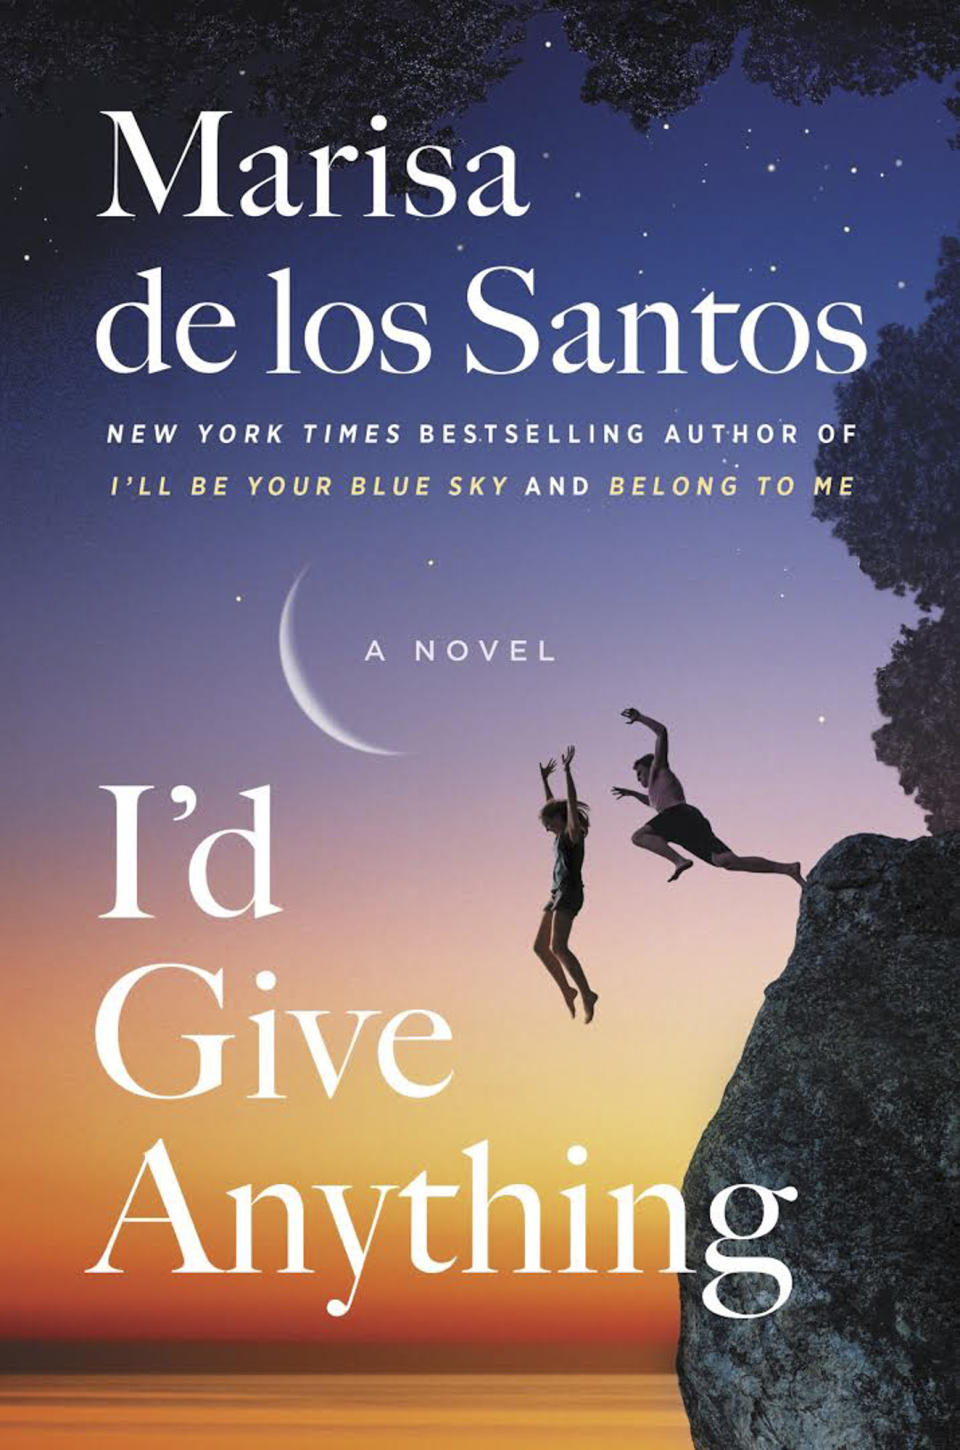 I'd Give Anything, by Marisa de los Santos